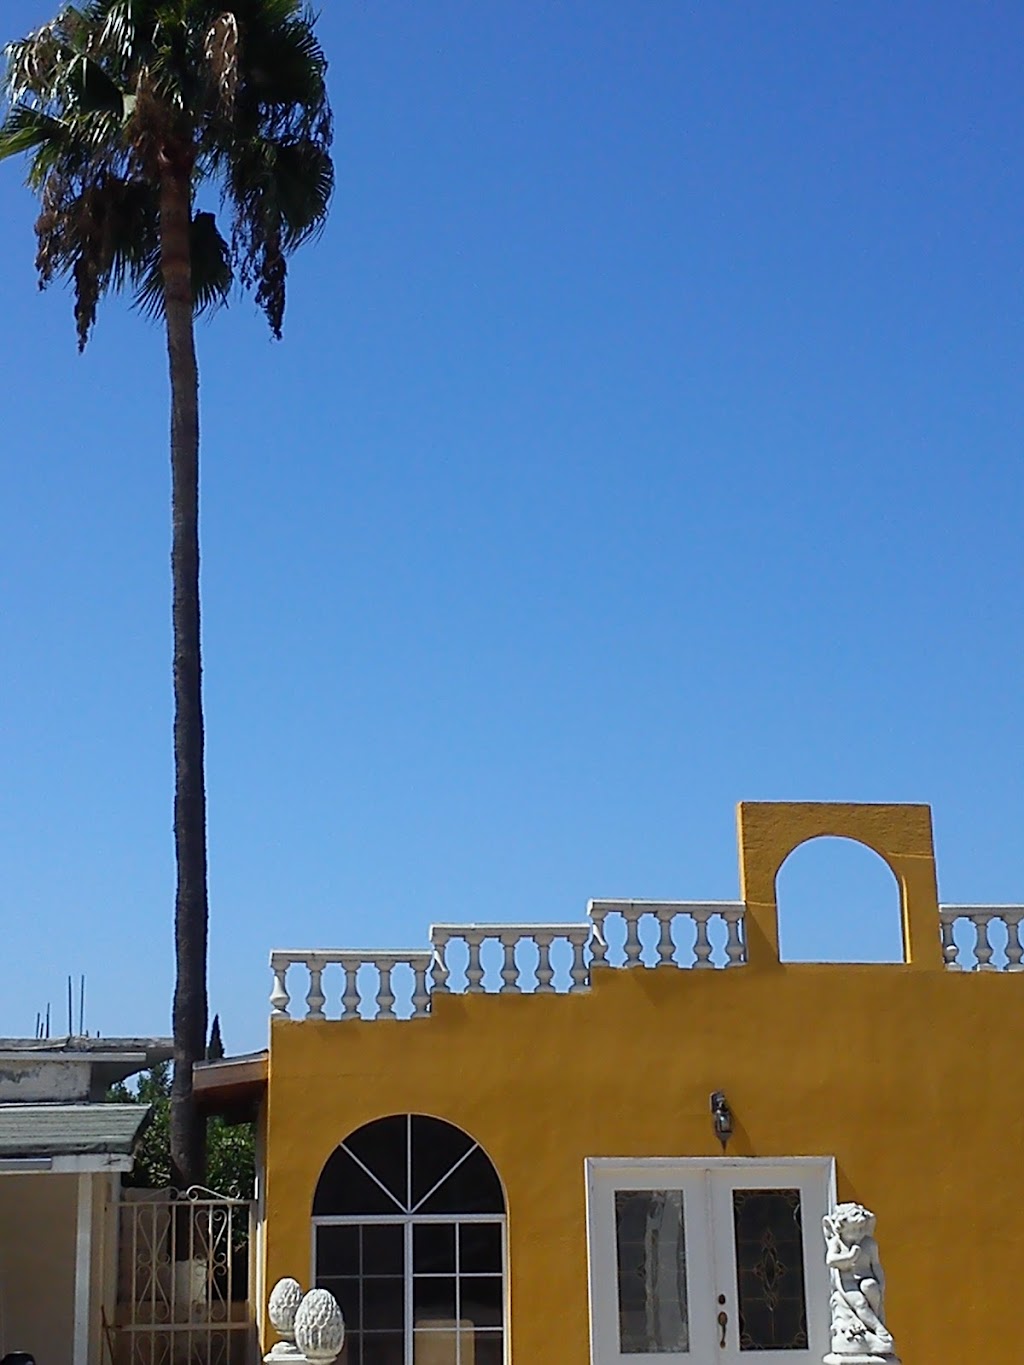 Parroquia Cristo rey | Villa de Real 1907, Col B.C., Villacruz, Bugambilias, 22224 Tijuana, B.C., Mexico | Phone: 664 298 0581